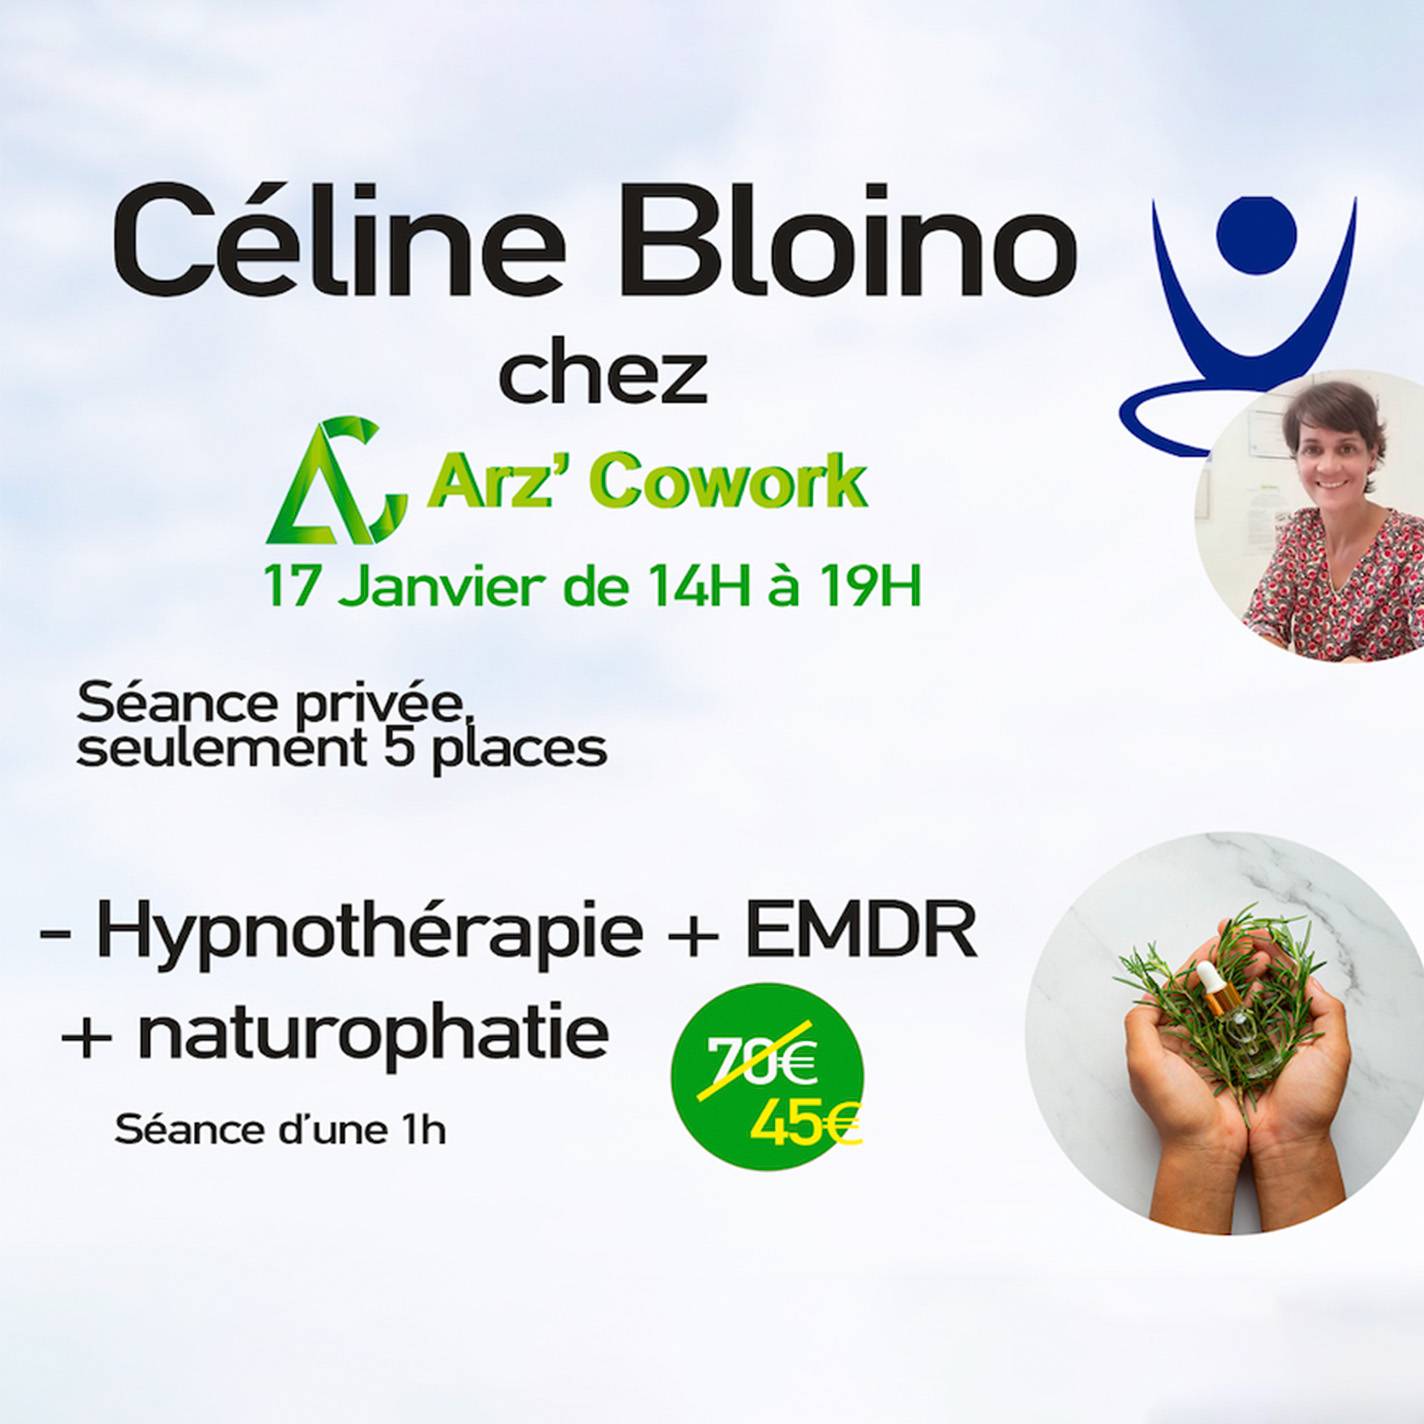 Céline Bloino